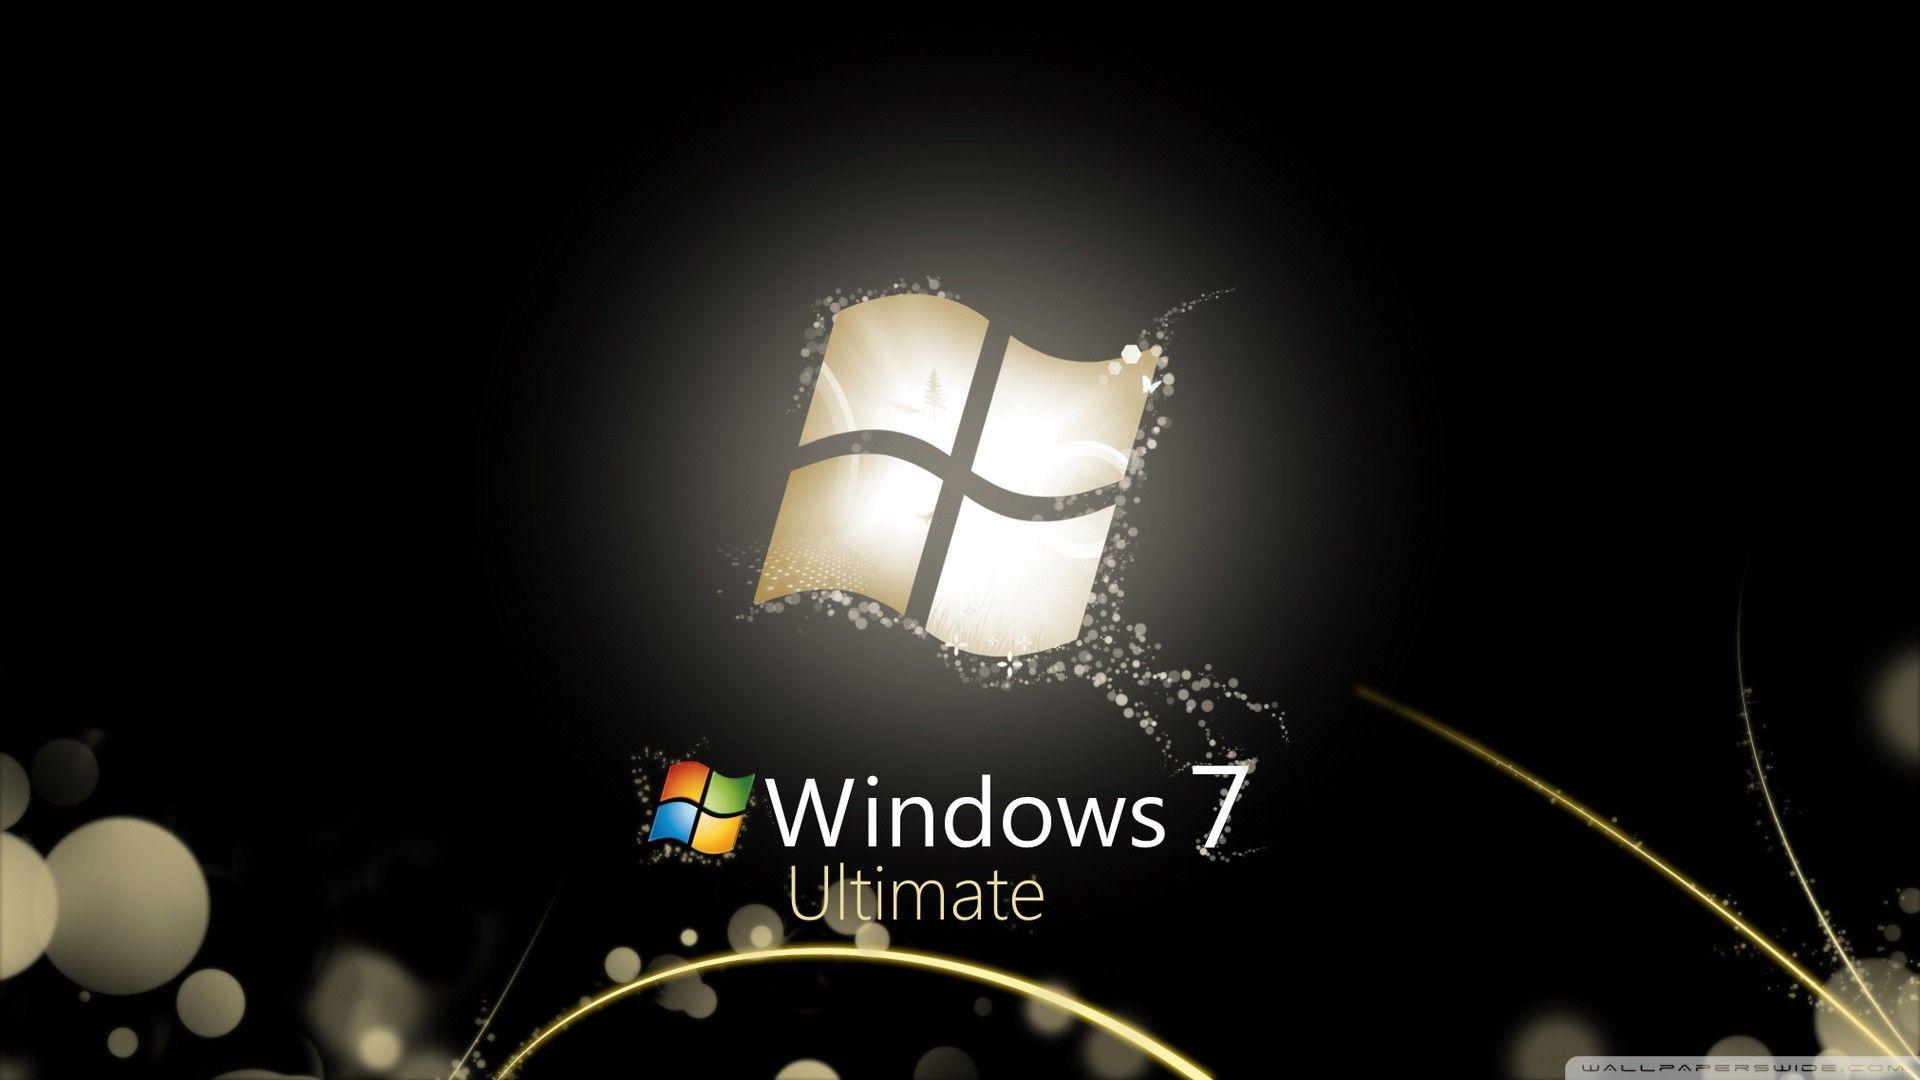 Wallpaper Windows 7 Ultimate Hd 3d For Laptop Image Num 1